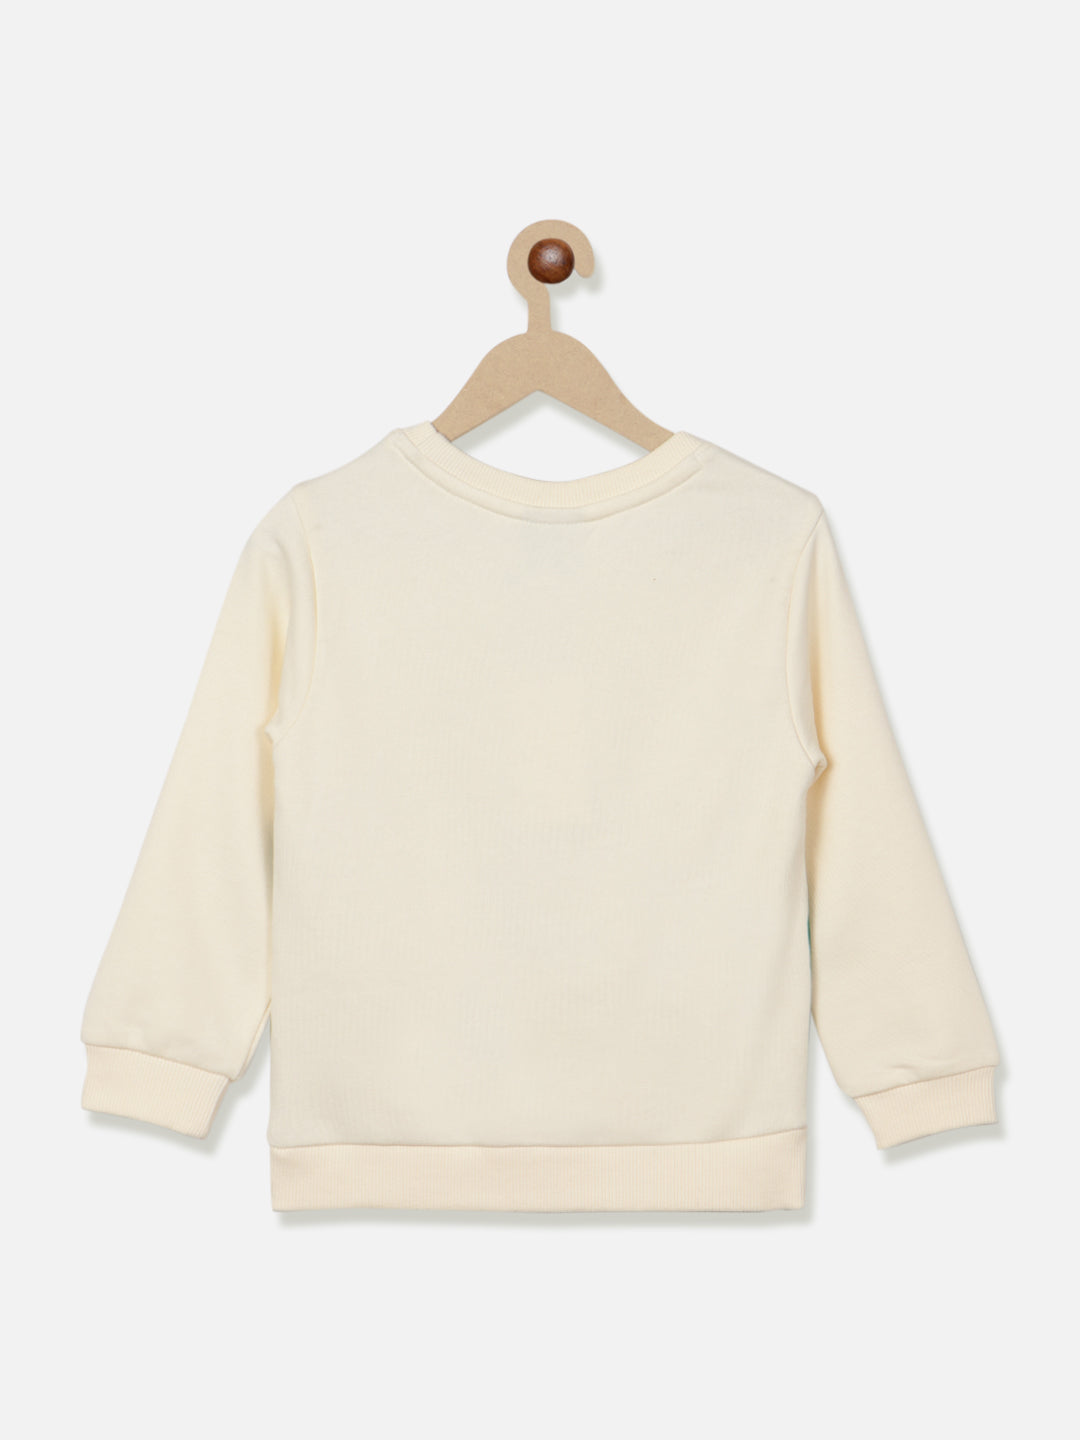 Nautinati Boys White Printed Long Sleeve PolyCotton Sweatshirt